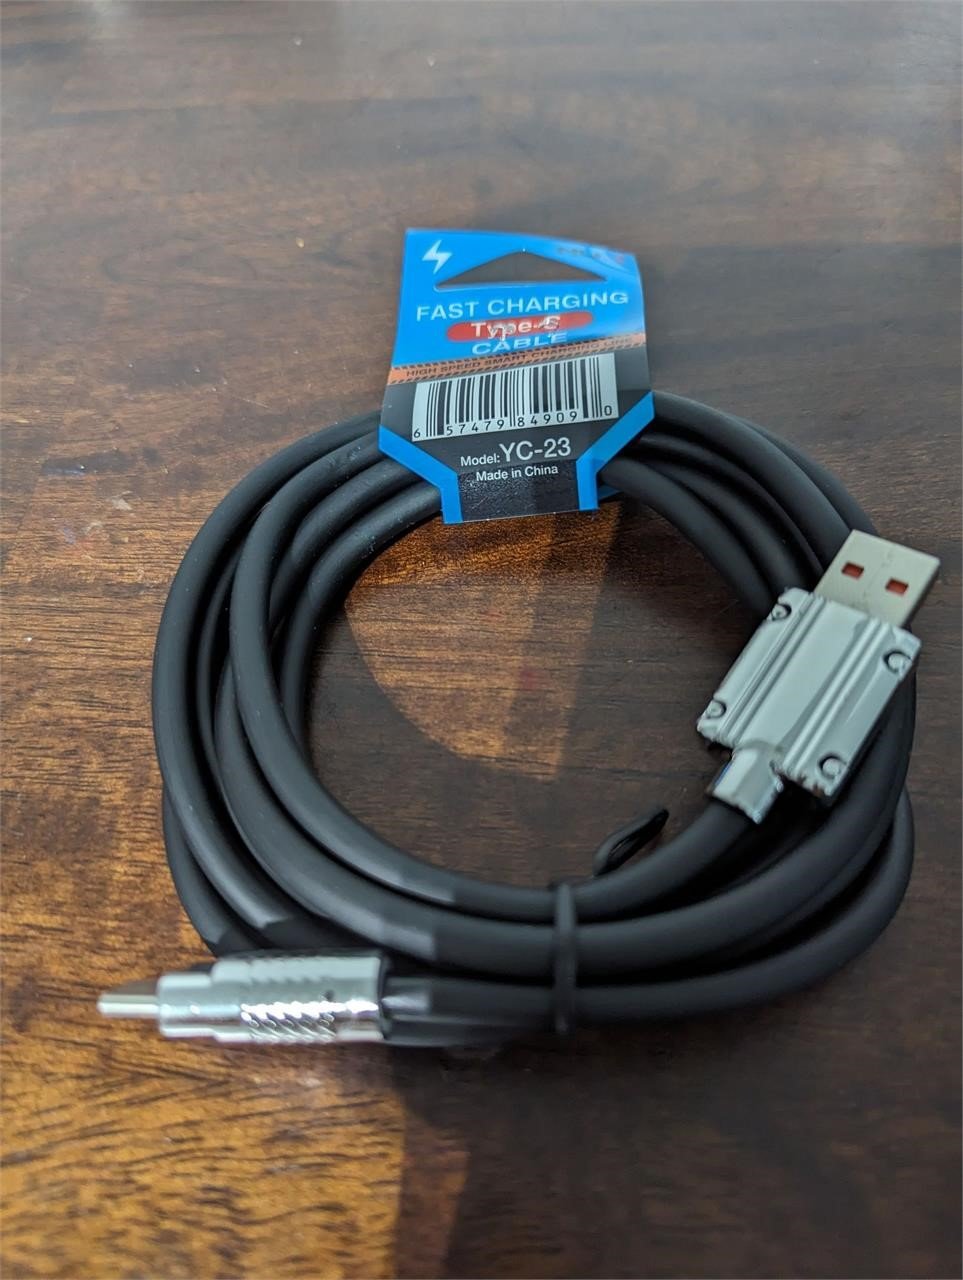 $12 6FT TYPE "C" Charging/Data USB Cord Hvy Duty